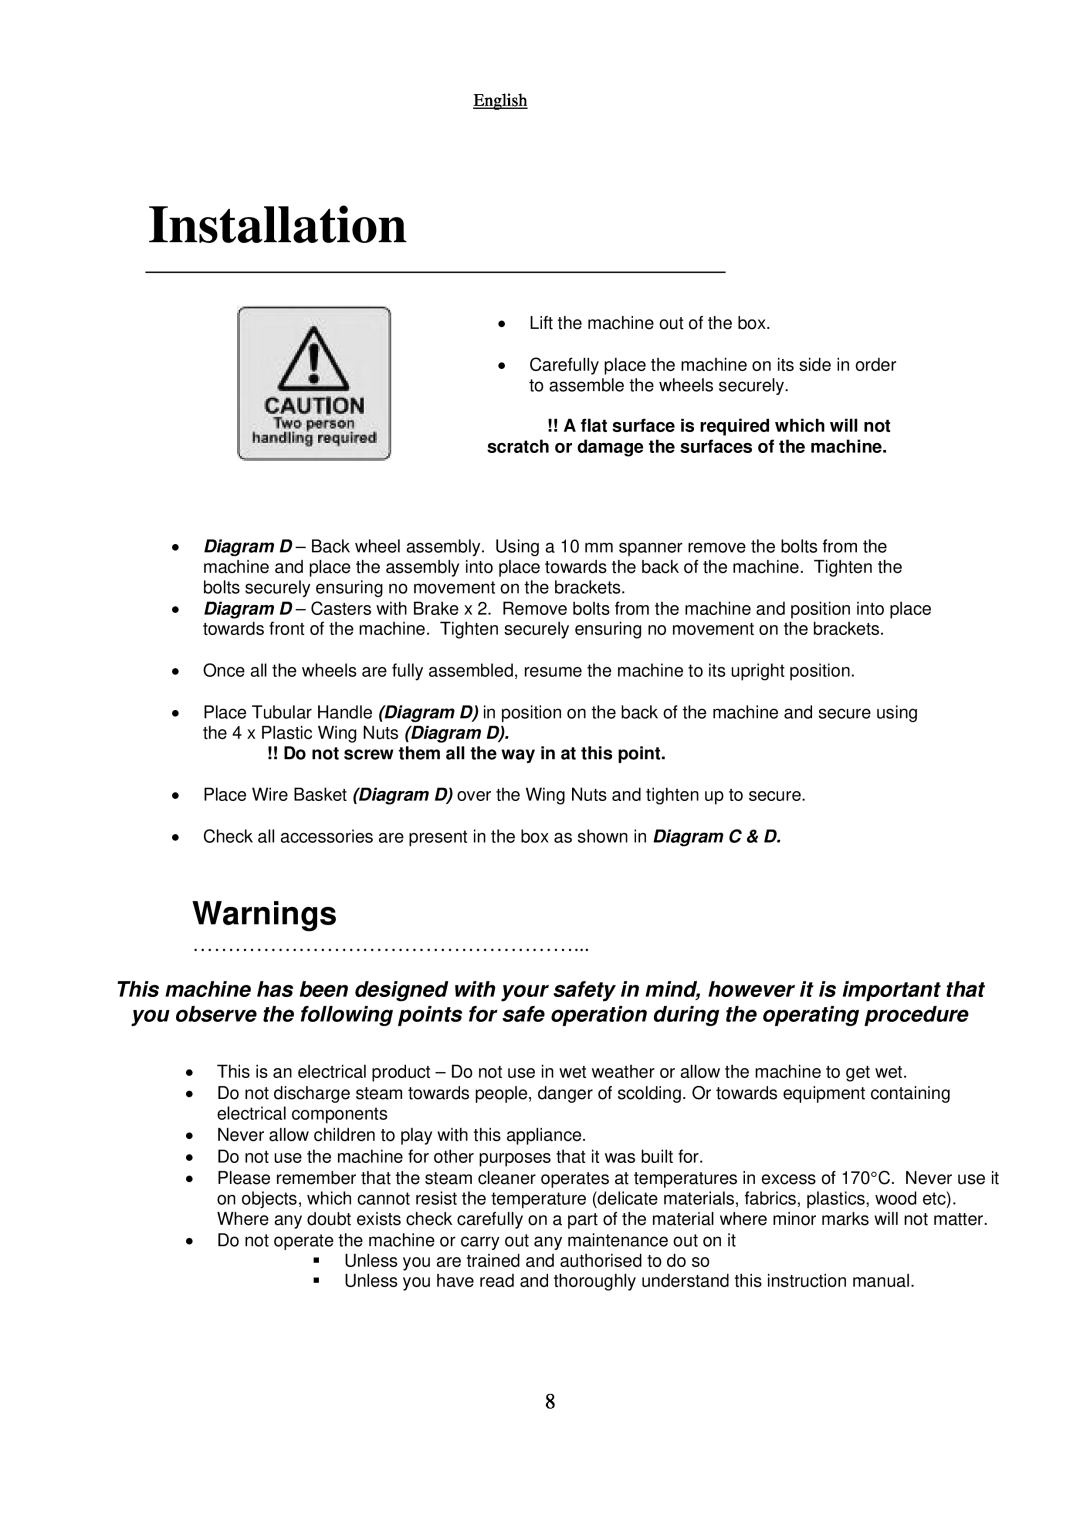 Nilfisk-Advance America GR 8000 manual Installation, Warnings 